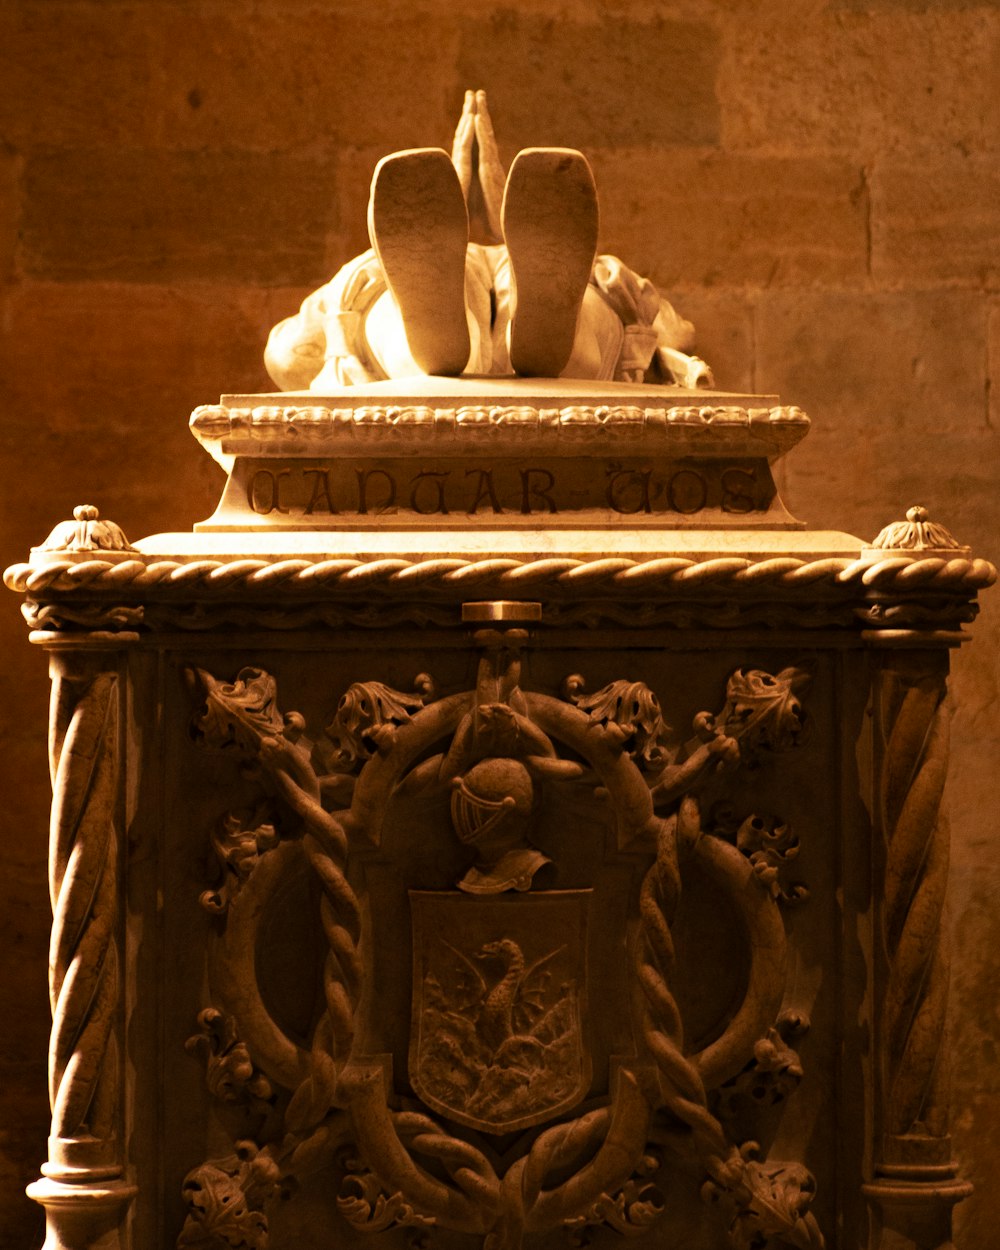 a close up of a statue on a pedestal